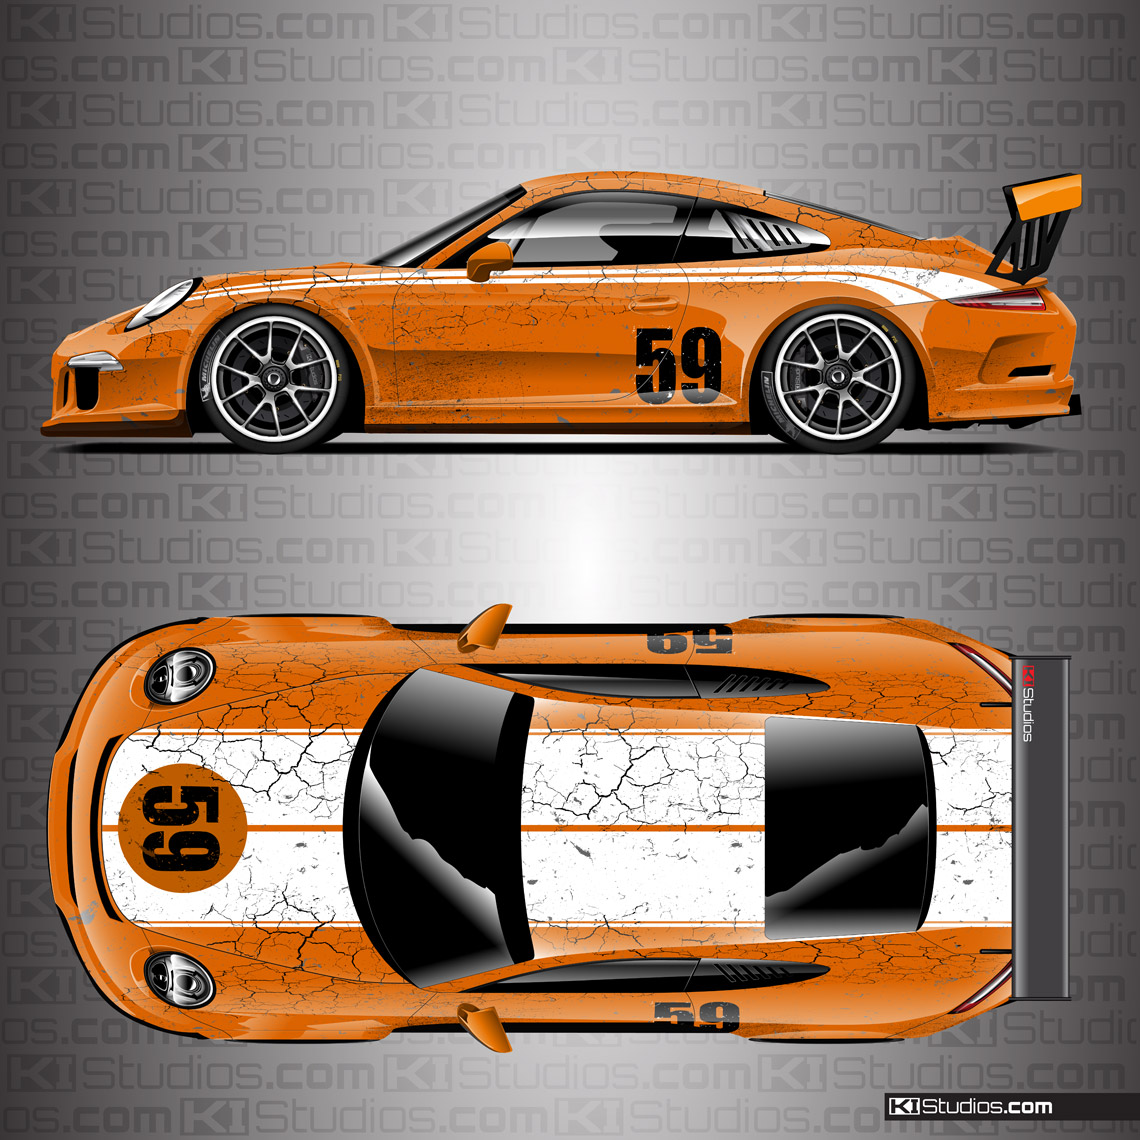 Porsche 991 GT3 Cup Car Brumos Porsche Style Distressed Livery by KI Studios - Orange, White, White